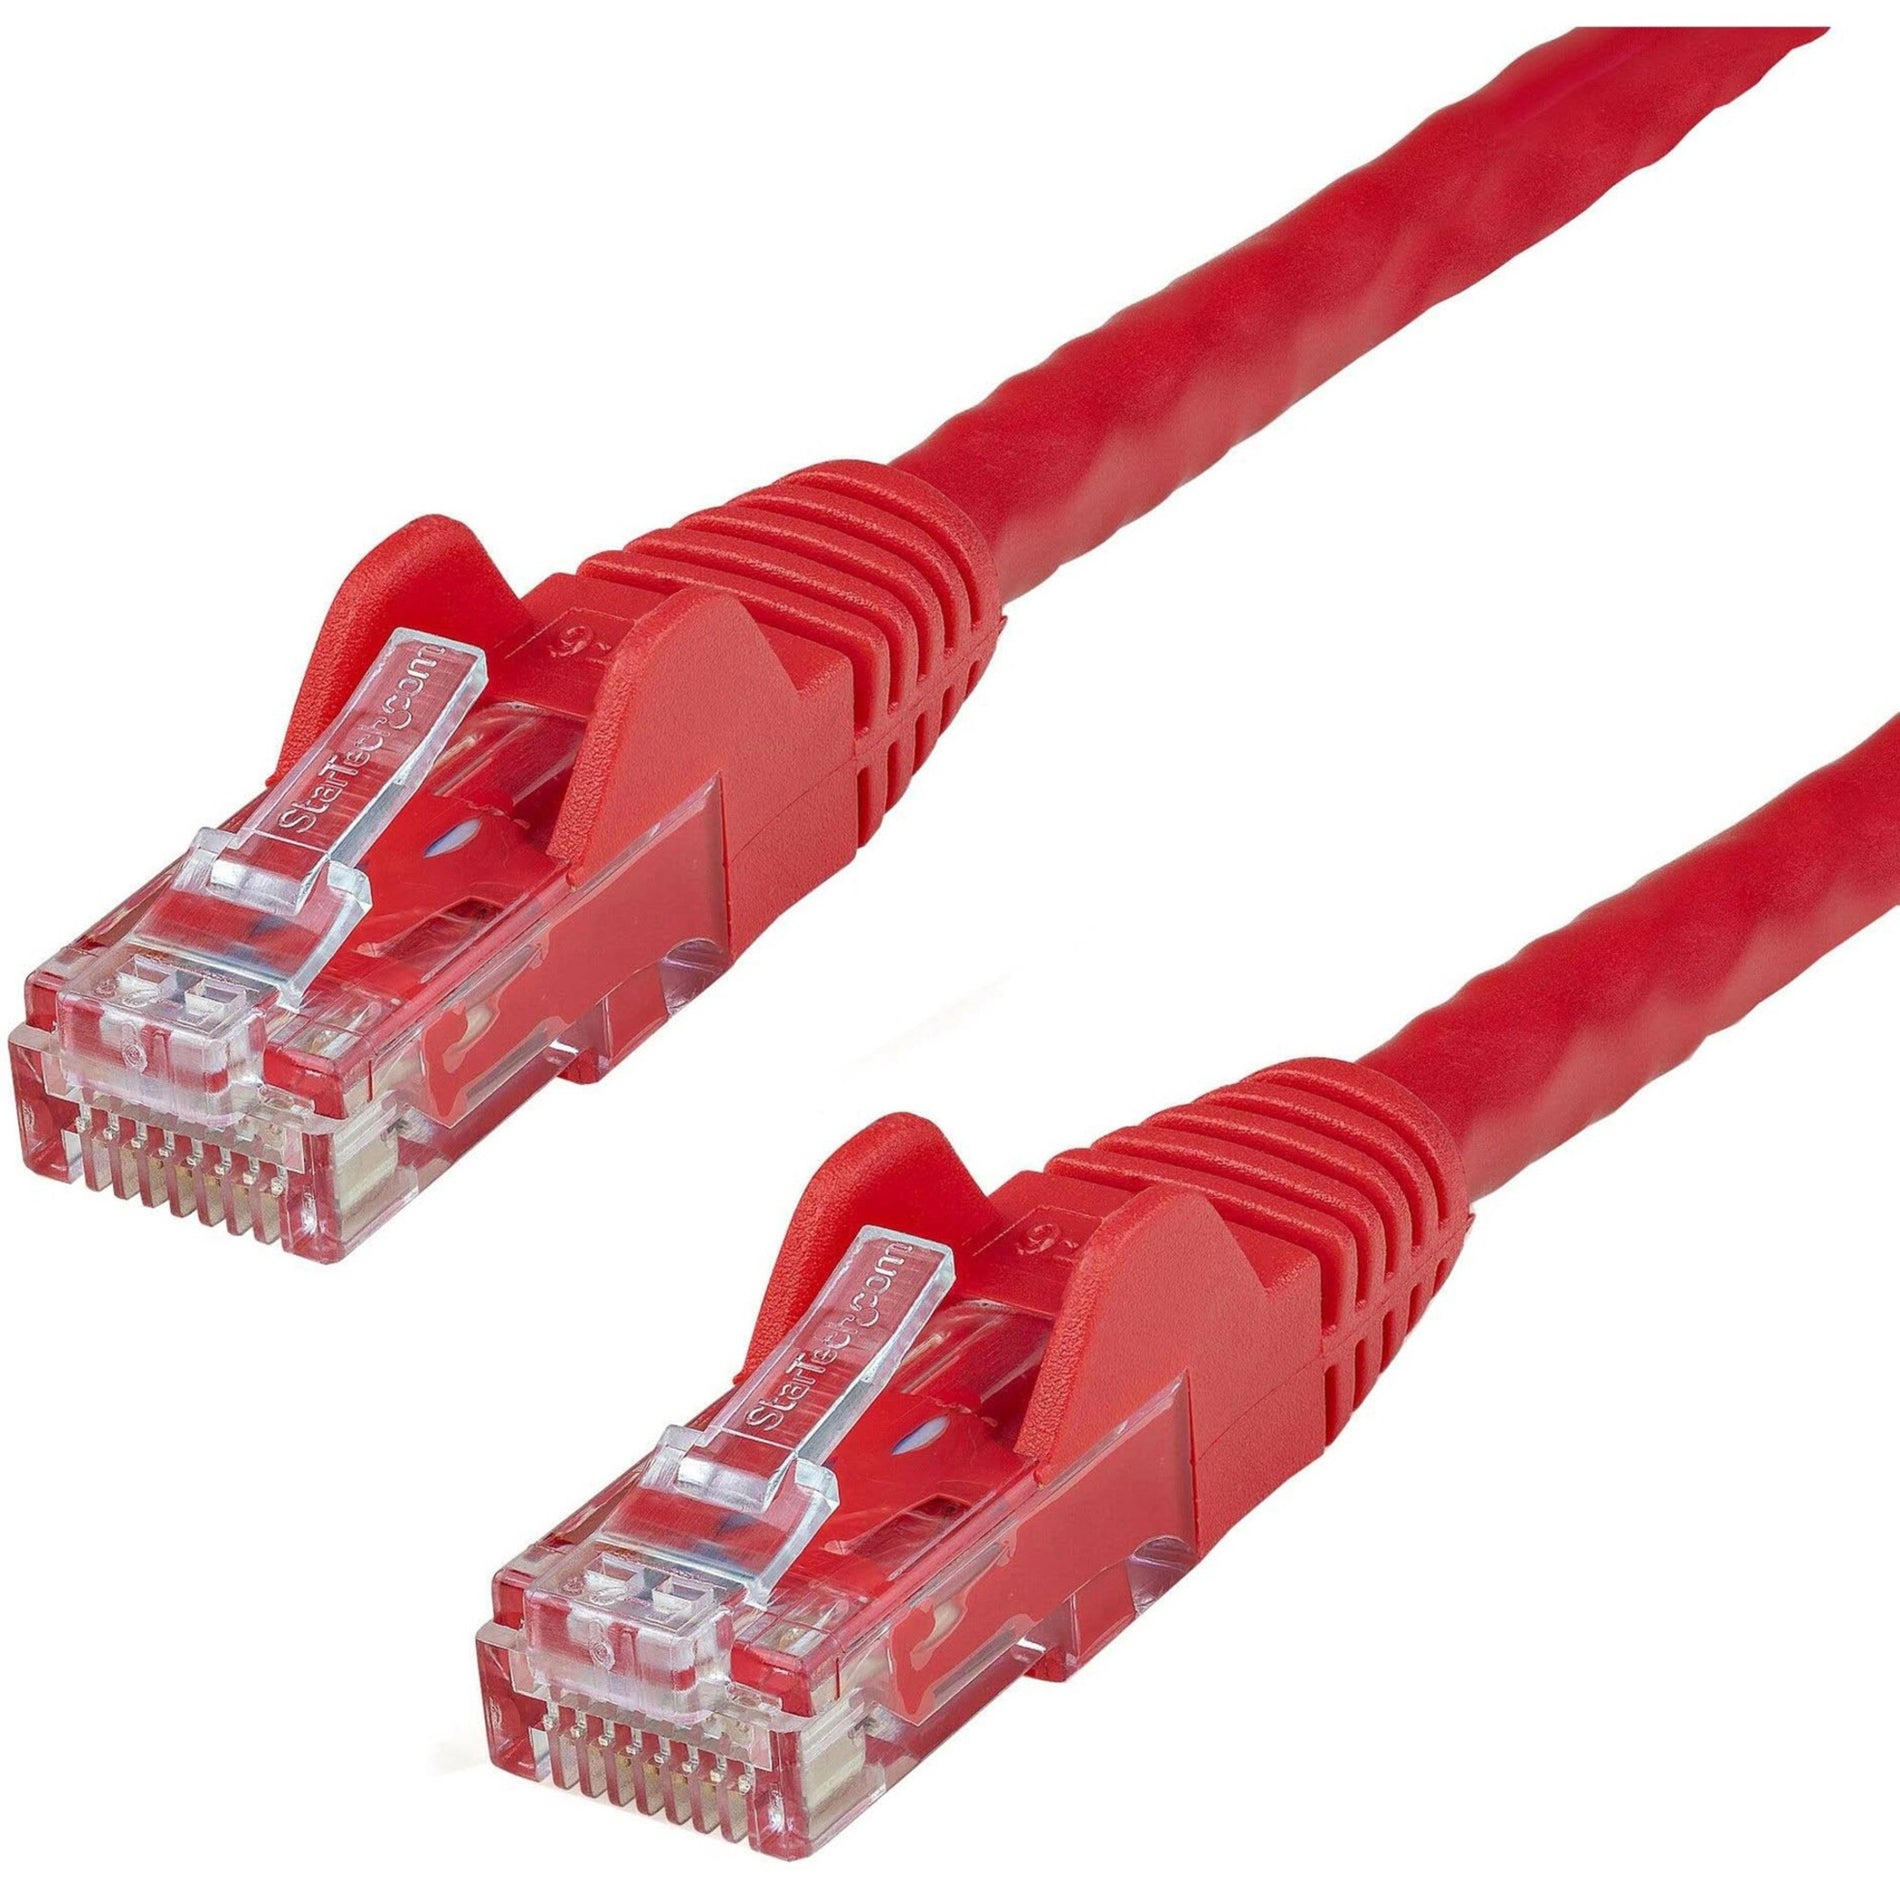 StarTech.com N6PATCH125RD Cat.6 UTP سلك شبكة التصحيح ، 125 قدم كبل إيثرنت أحمر ، منافذ RJ45 غير قابلة للعقد  ستارتيك.كوم